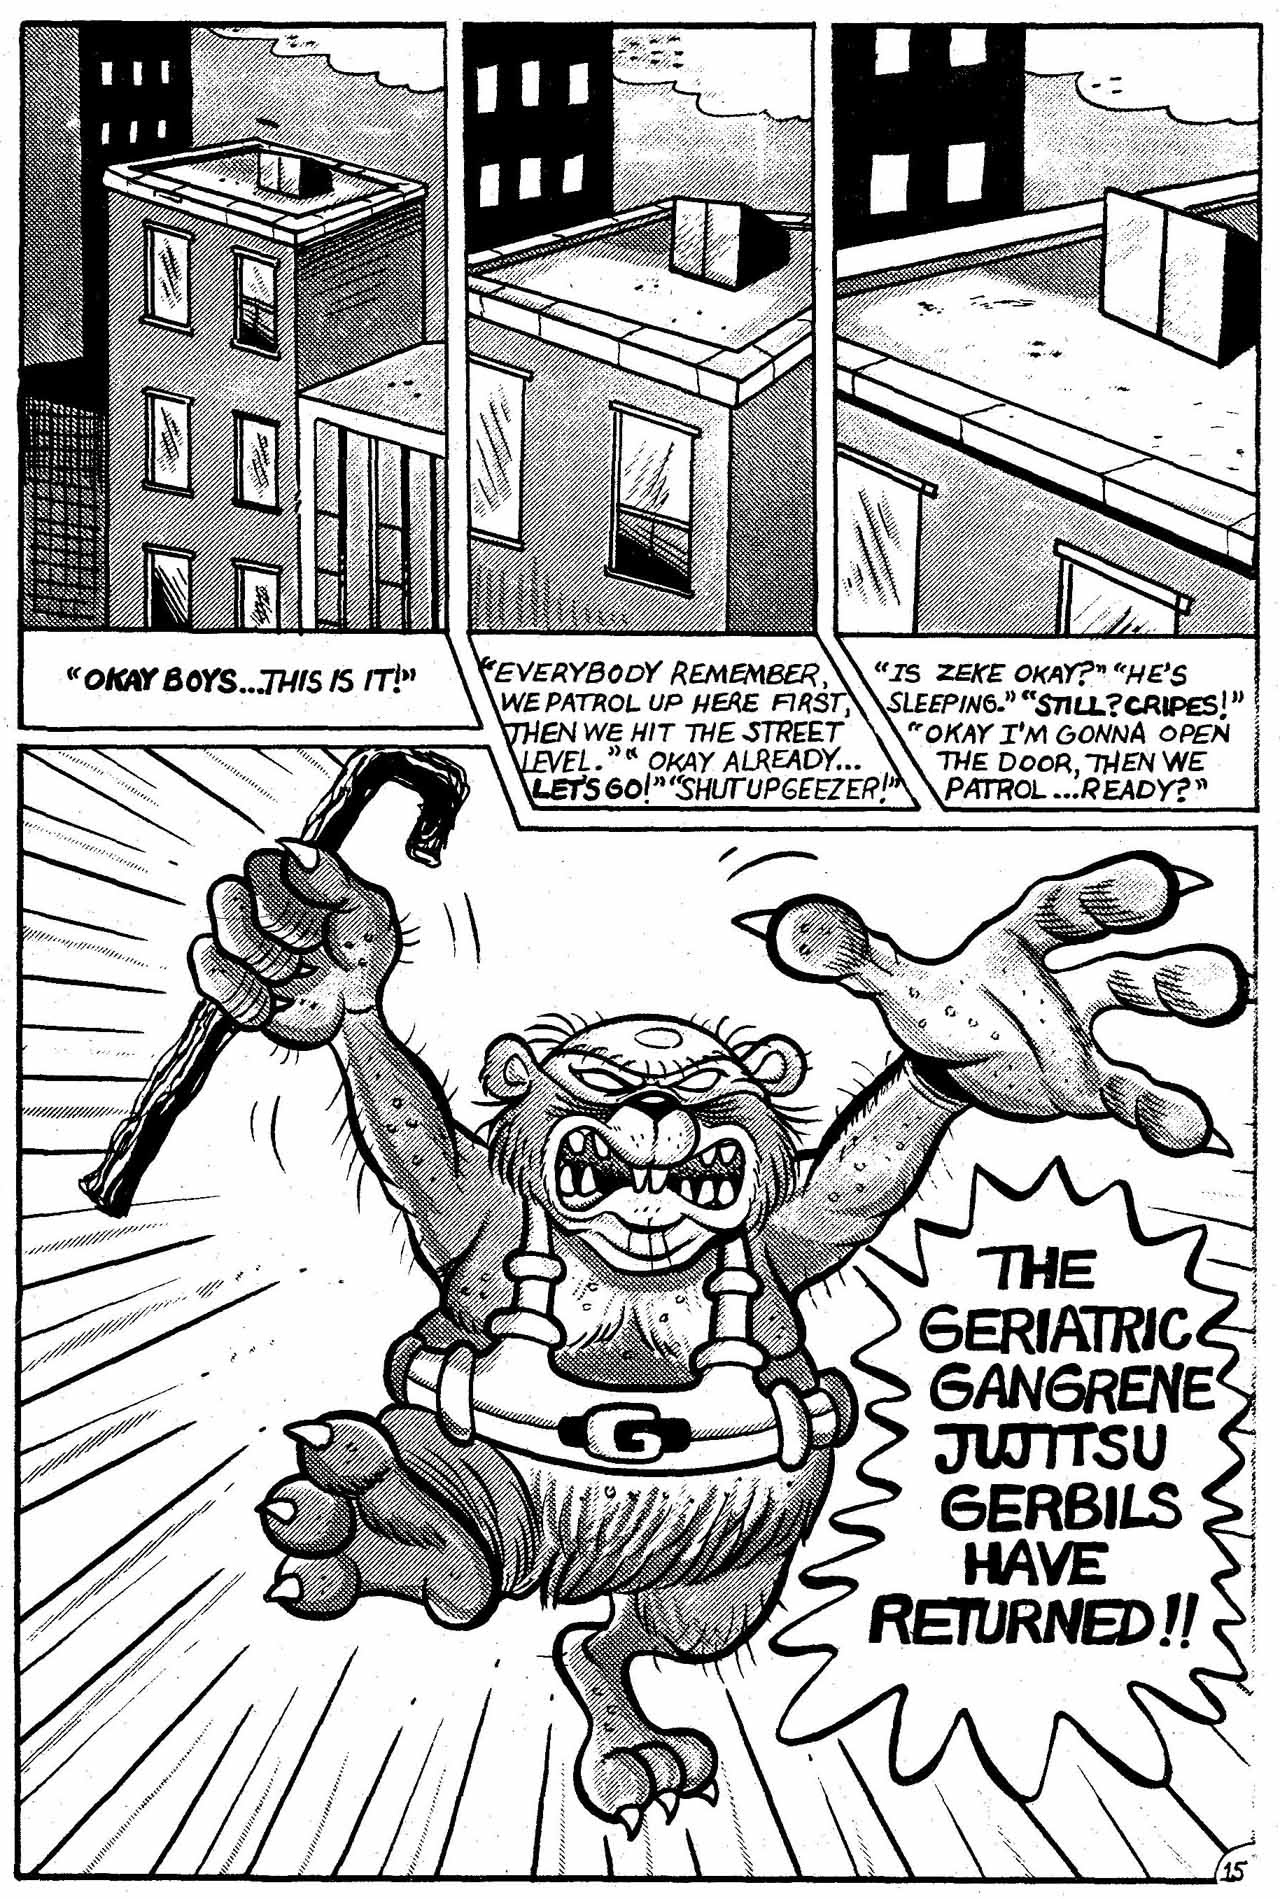 Read online Geriatric Gangrene Jujitsu Gerbils comic -  Issue #1 - 18